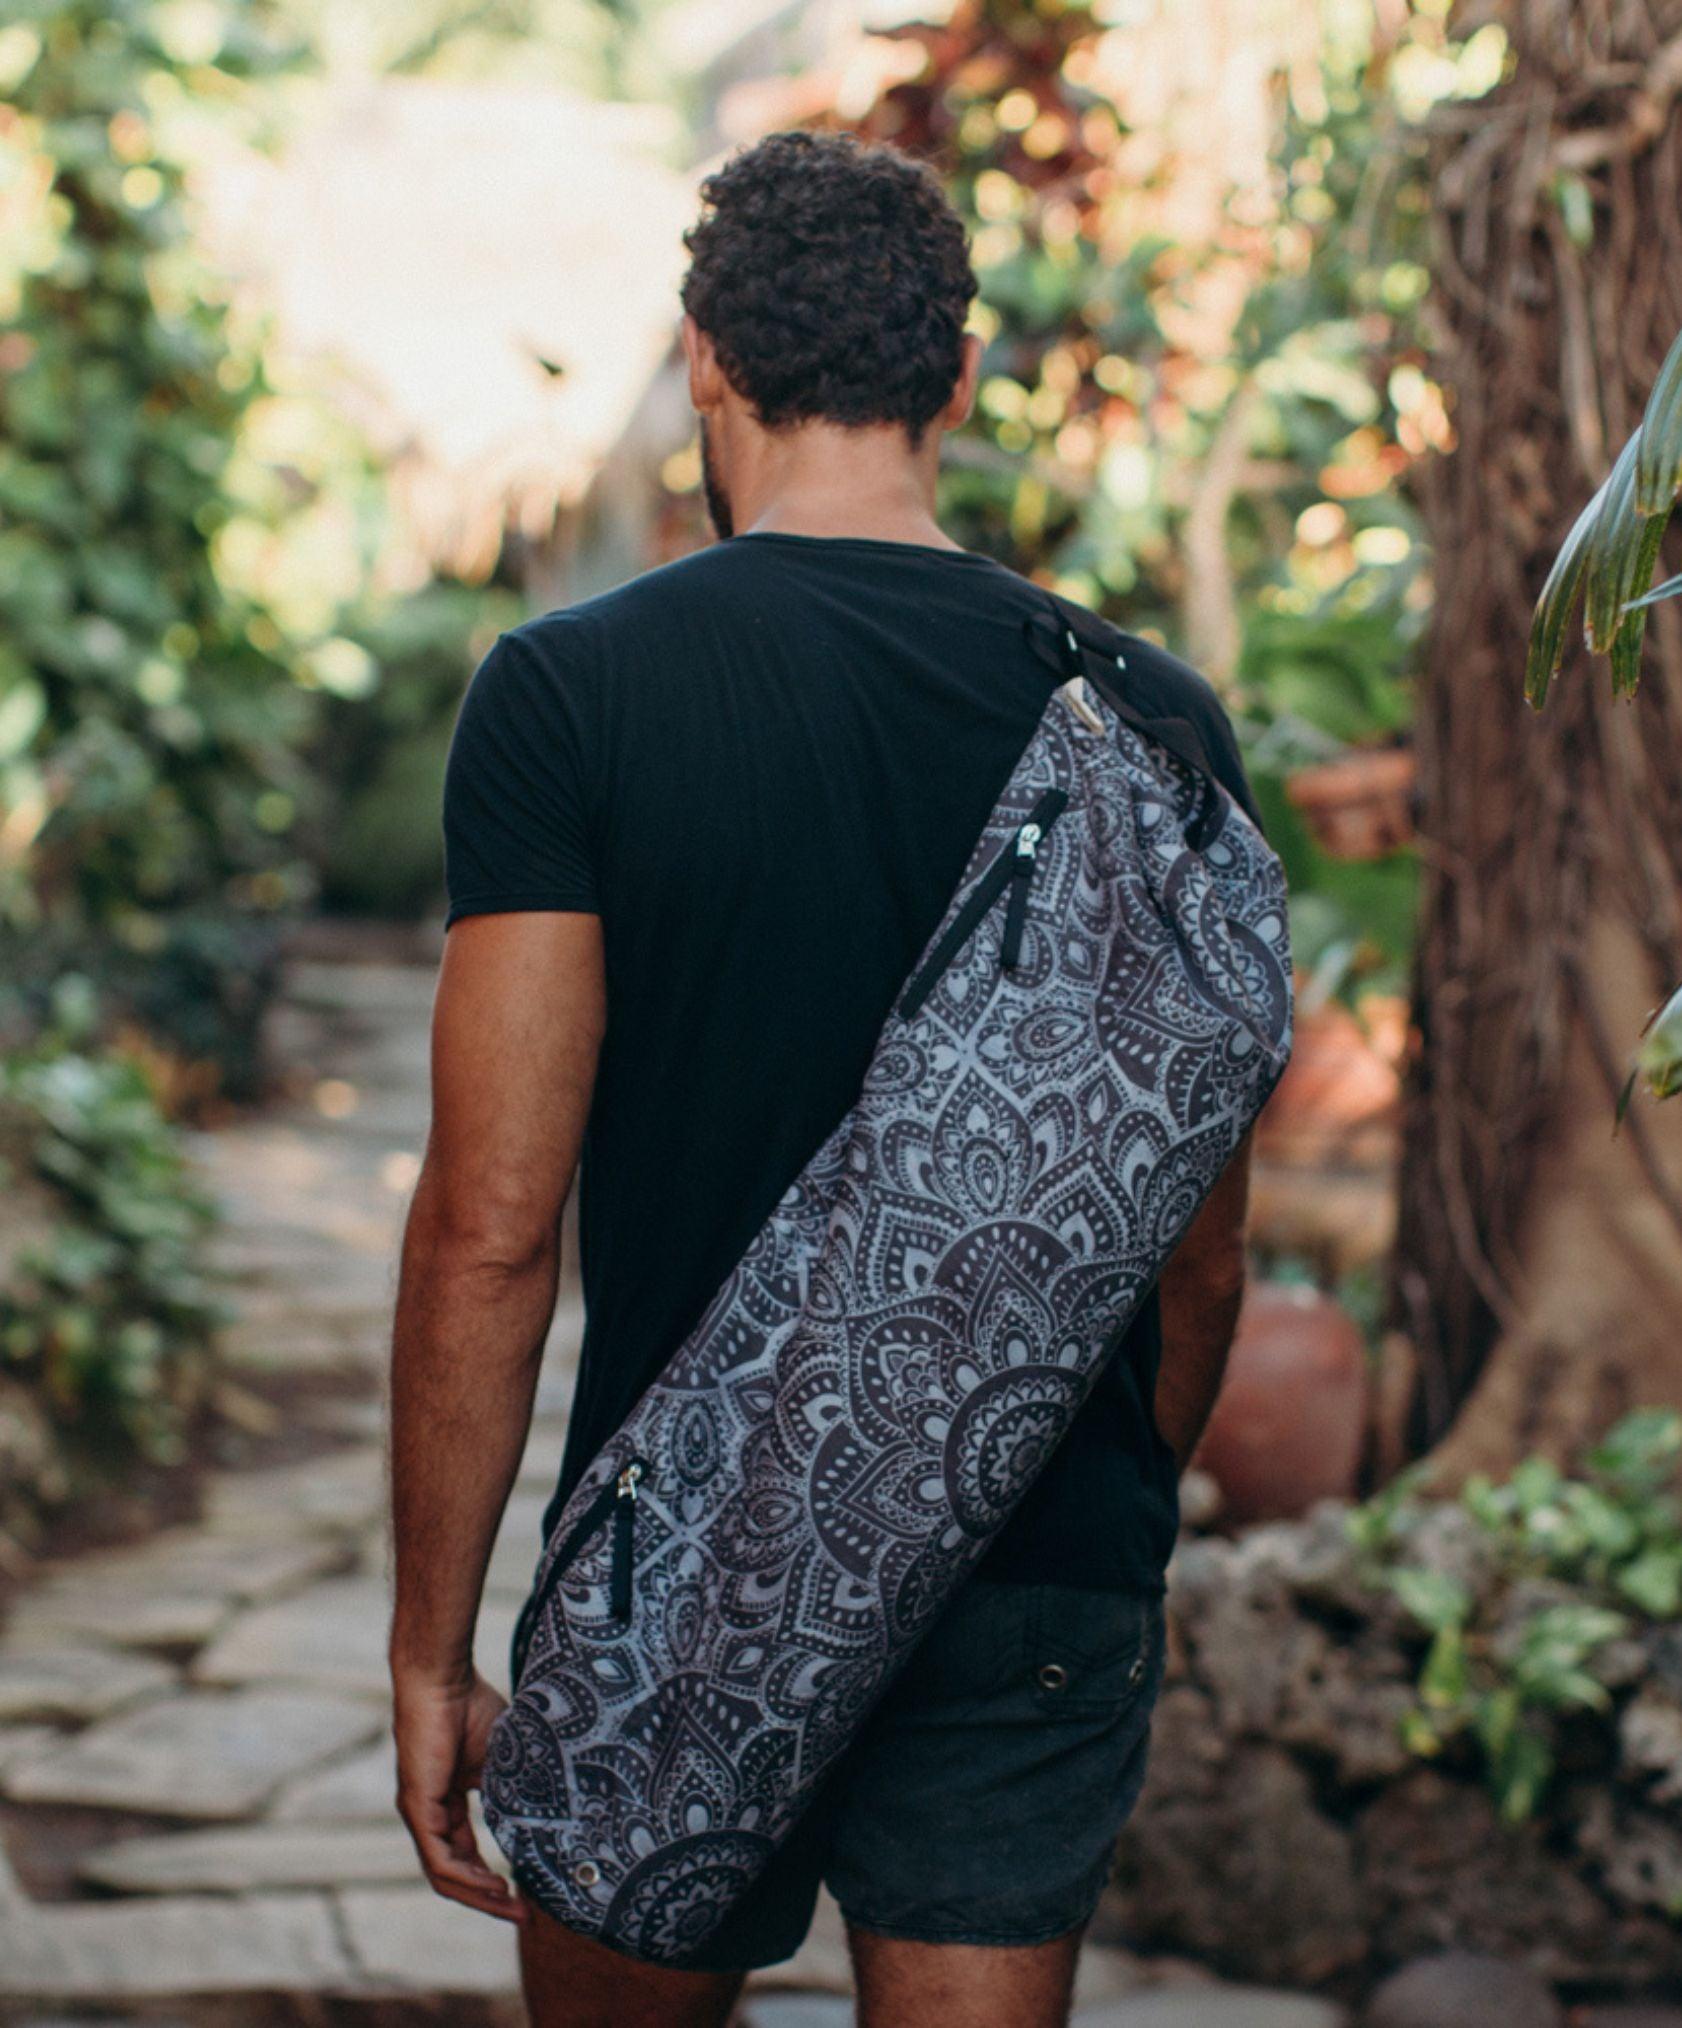 Mimigo Travel Yoga Gym Bag With Yoga Mat Holderyoga Mat Bags Fits